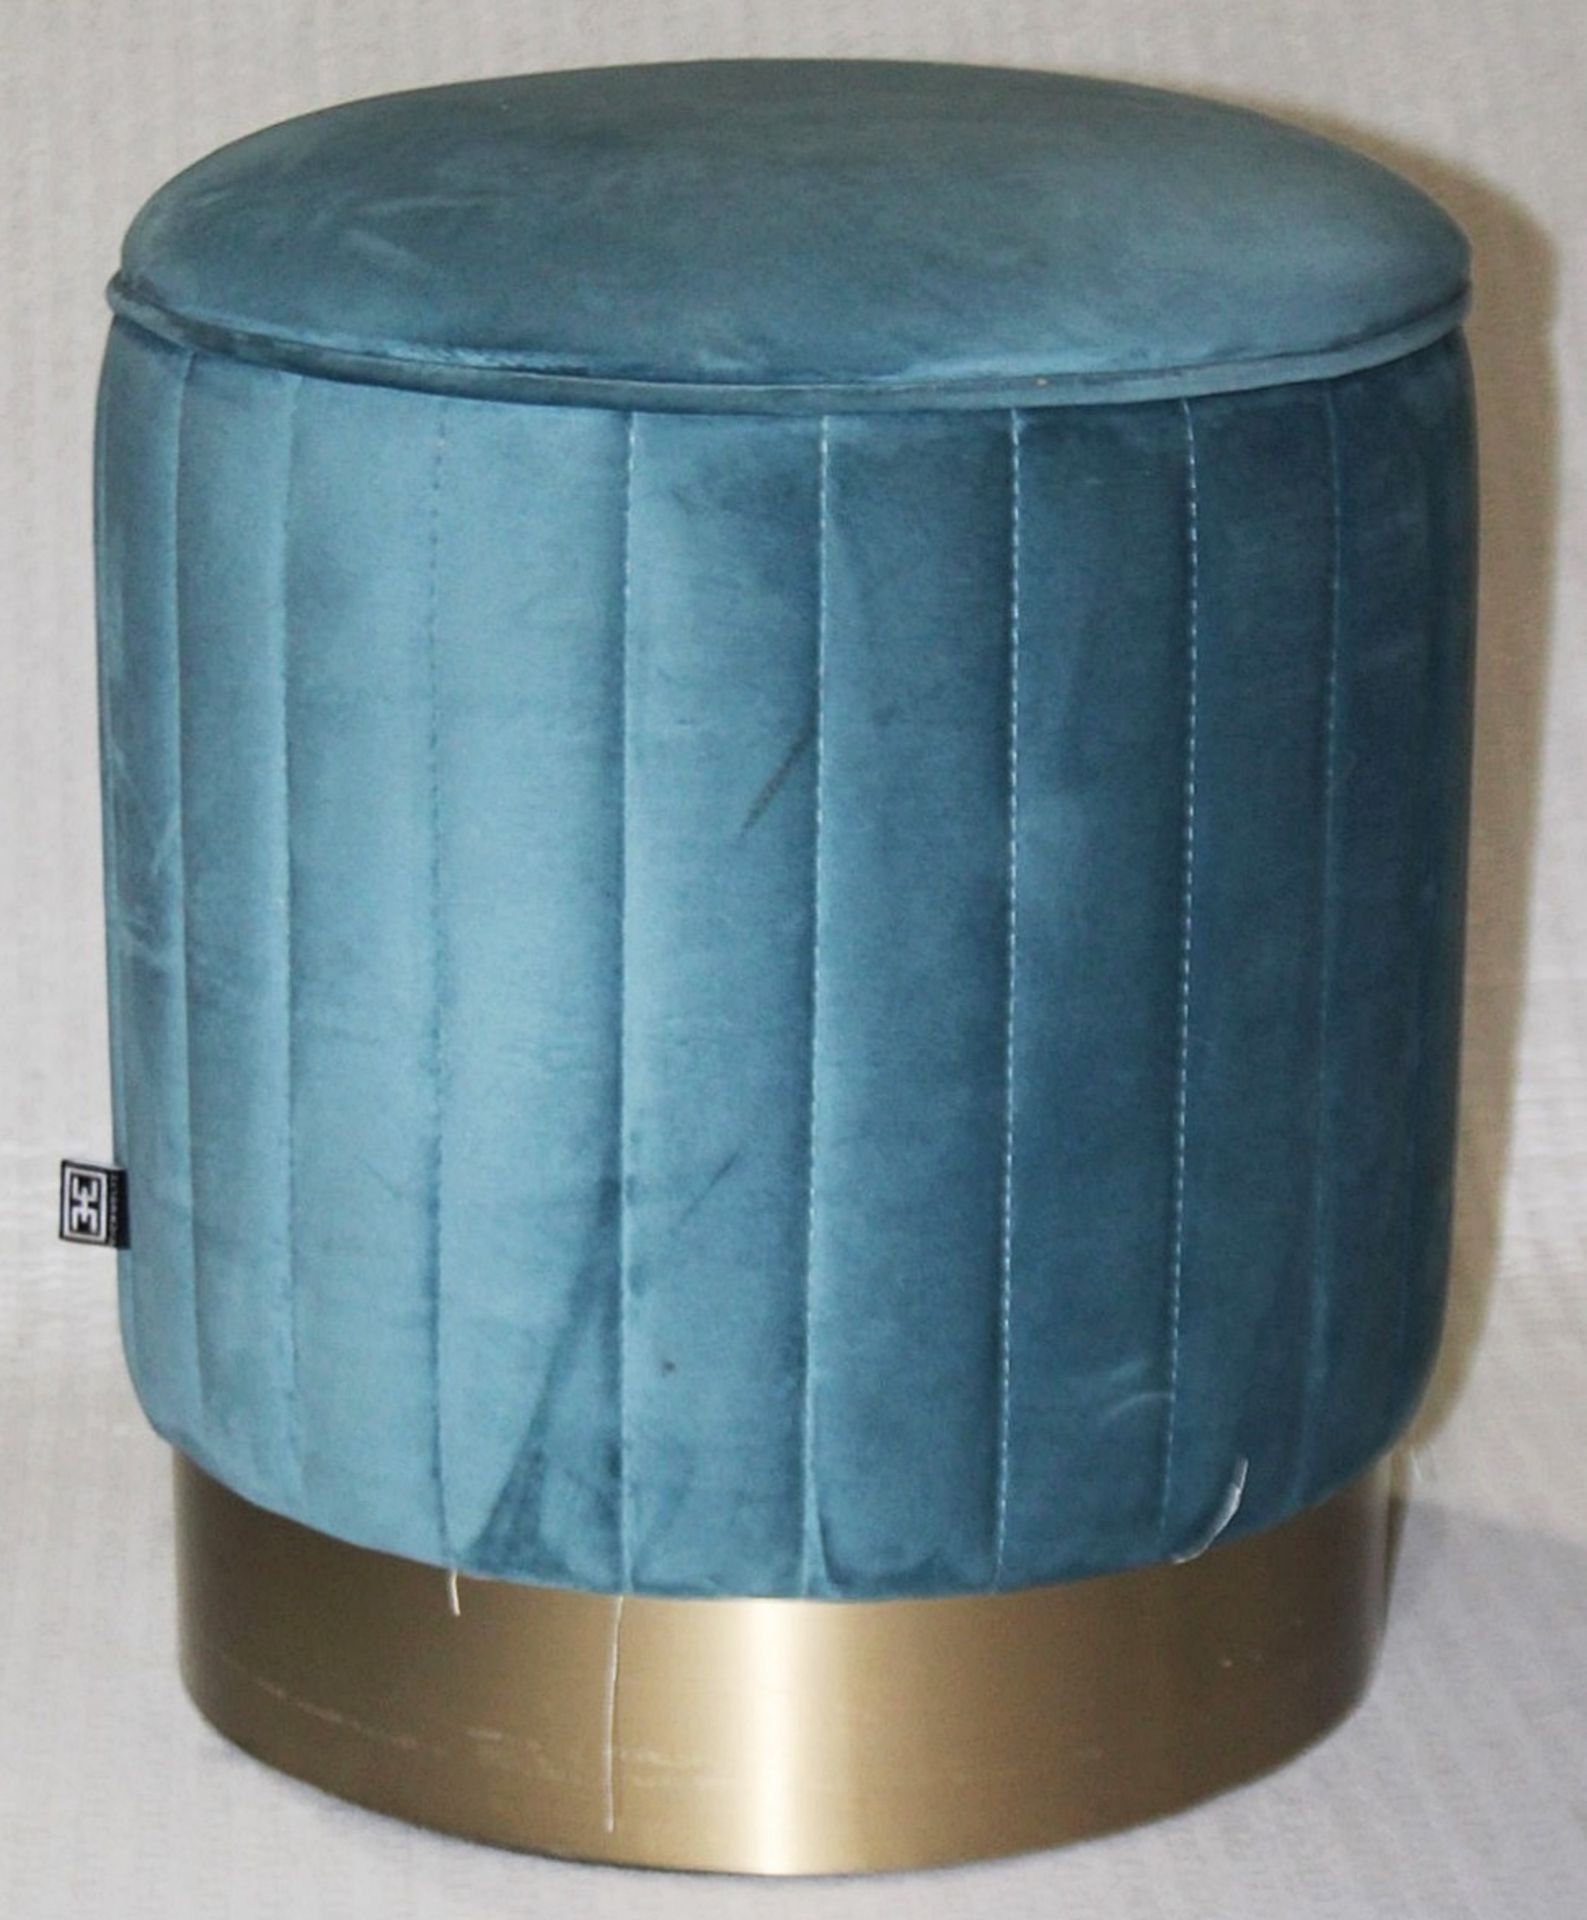 1 x EICHHOLTZ 'Allegra' Luxury Teal Velvet Vanity Stool, With A Brass Base - Original Price £850.00 - Image 5 of 7